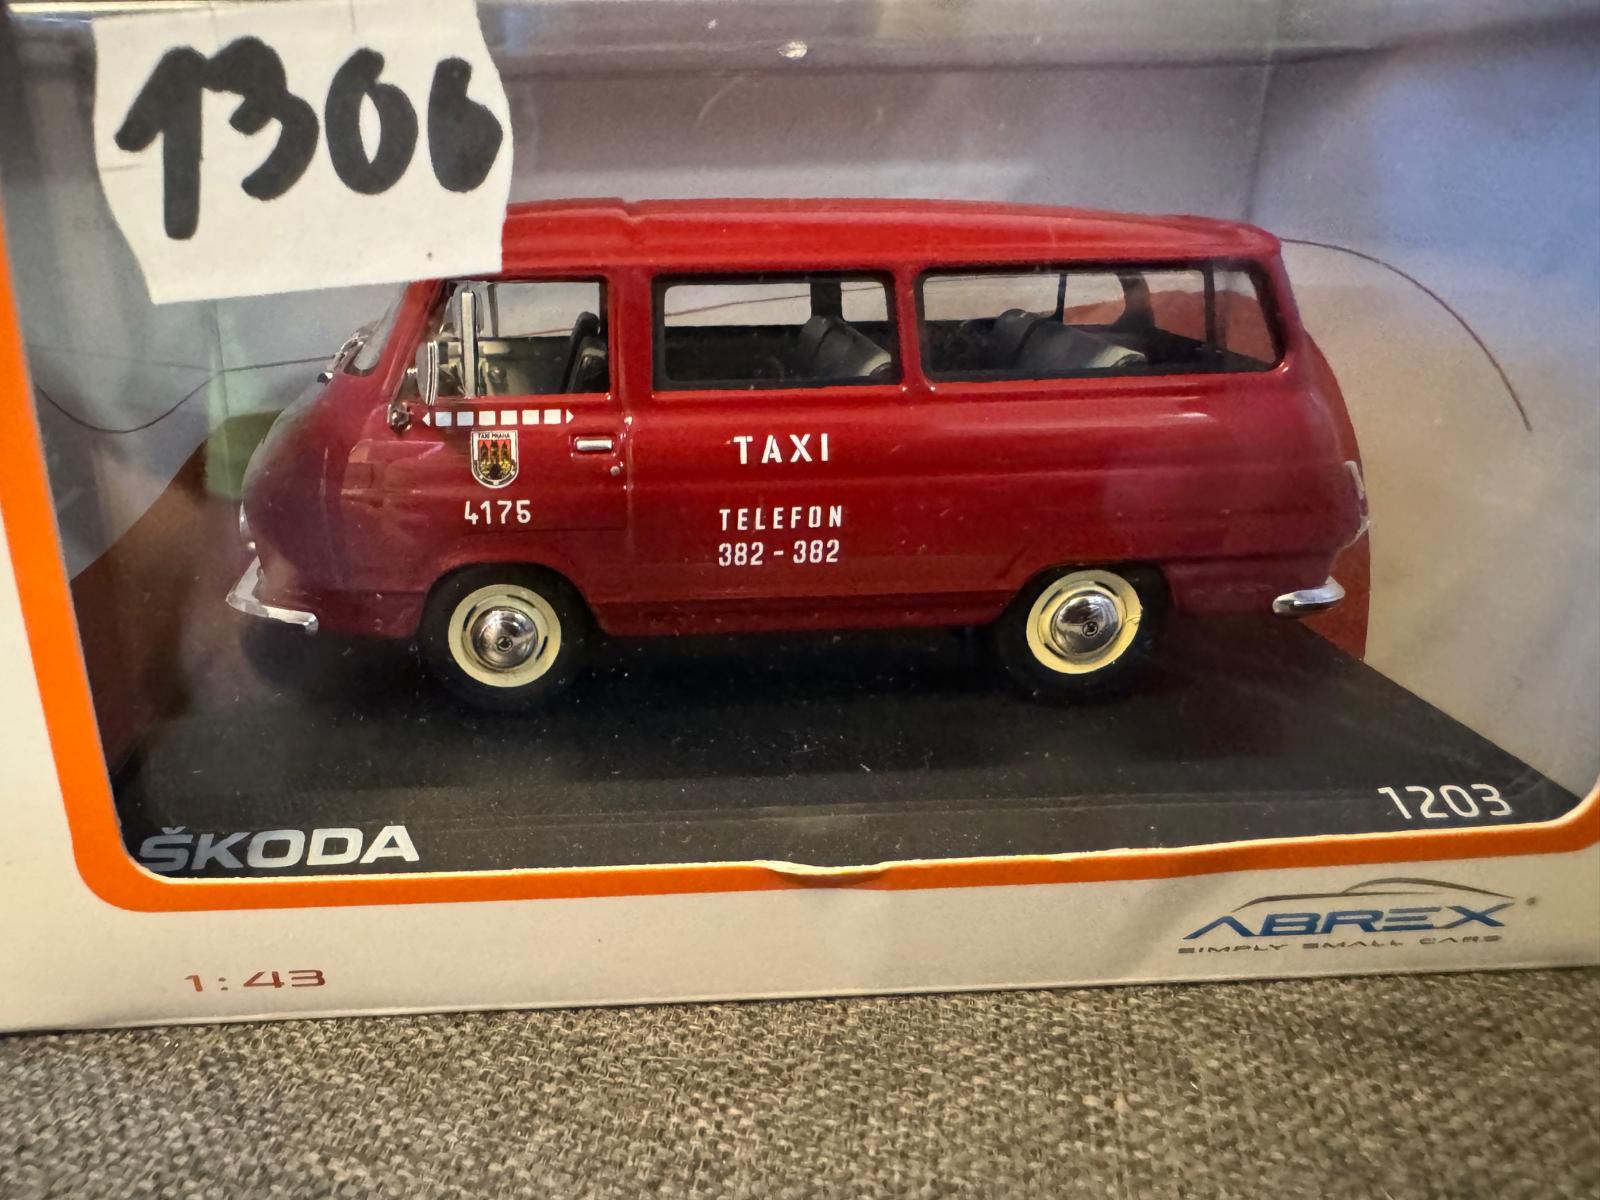 Škoda 1203 taxi rubínová 1:43 Abrex - Modely automobilov